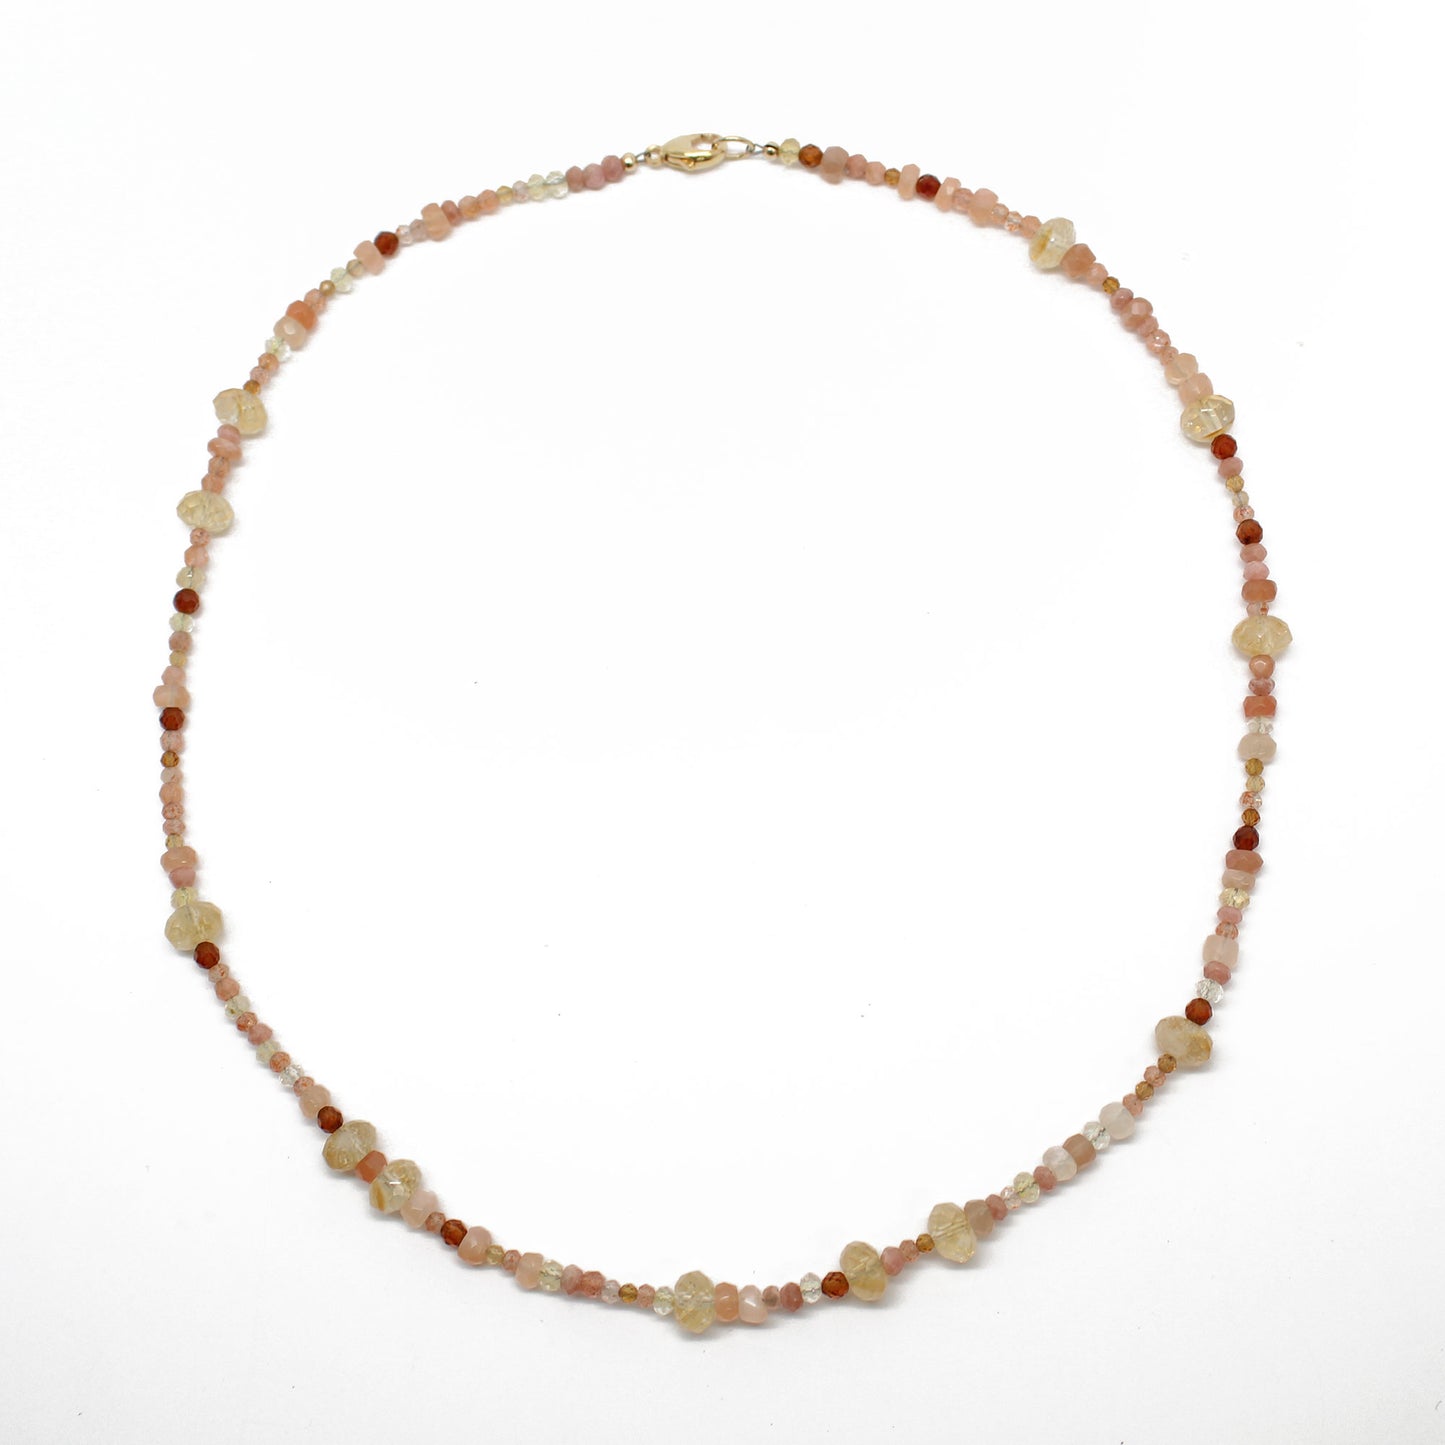 Semi Precious Gemstone Necklace with Citrine, Sunstone, Tourmaline